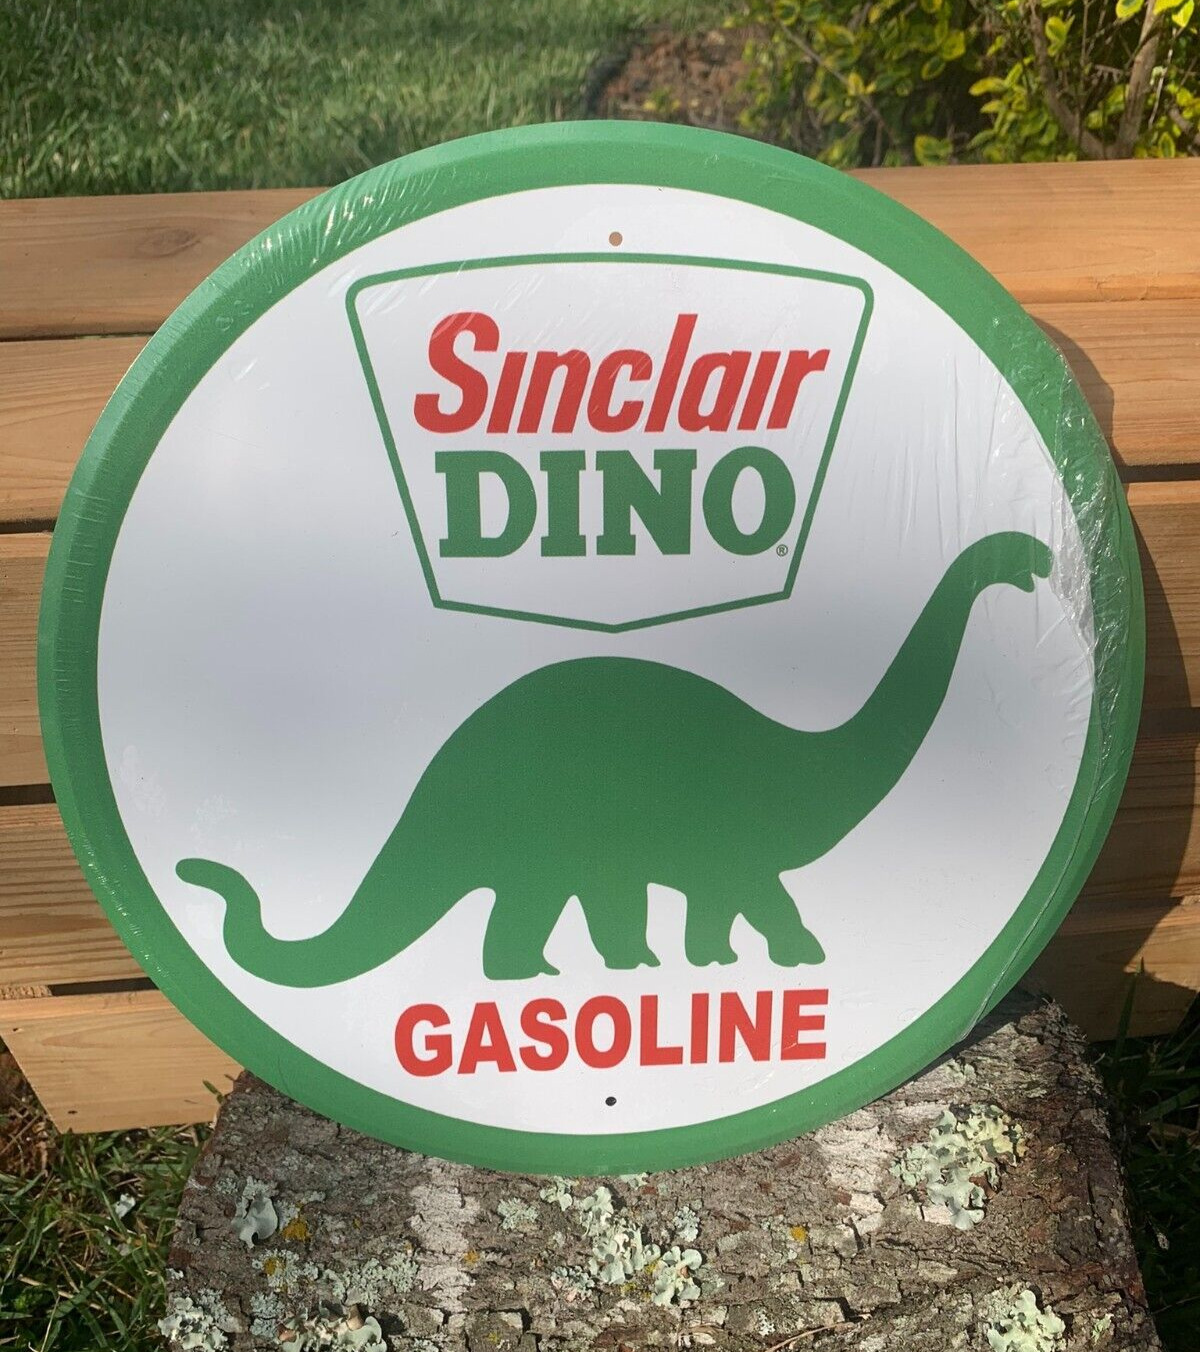 Sinclair Dino Gasoline Round Metal Sign Tin Vintage Garage Auto Shop Oil